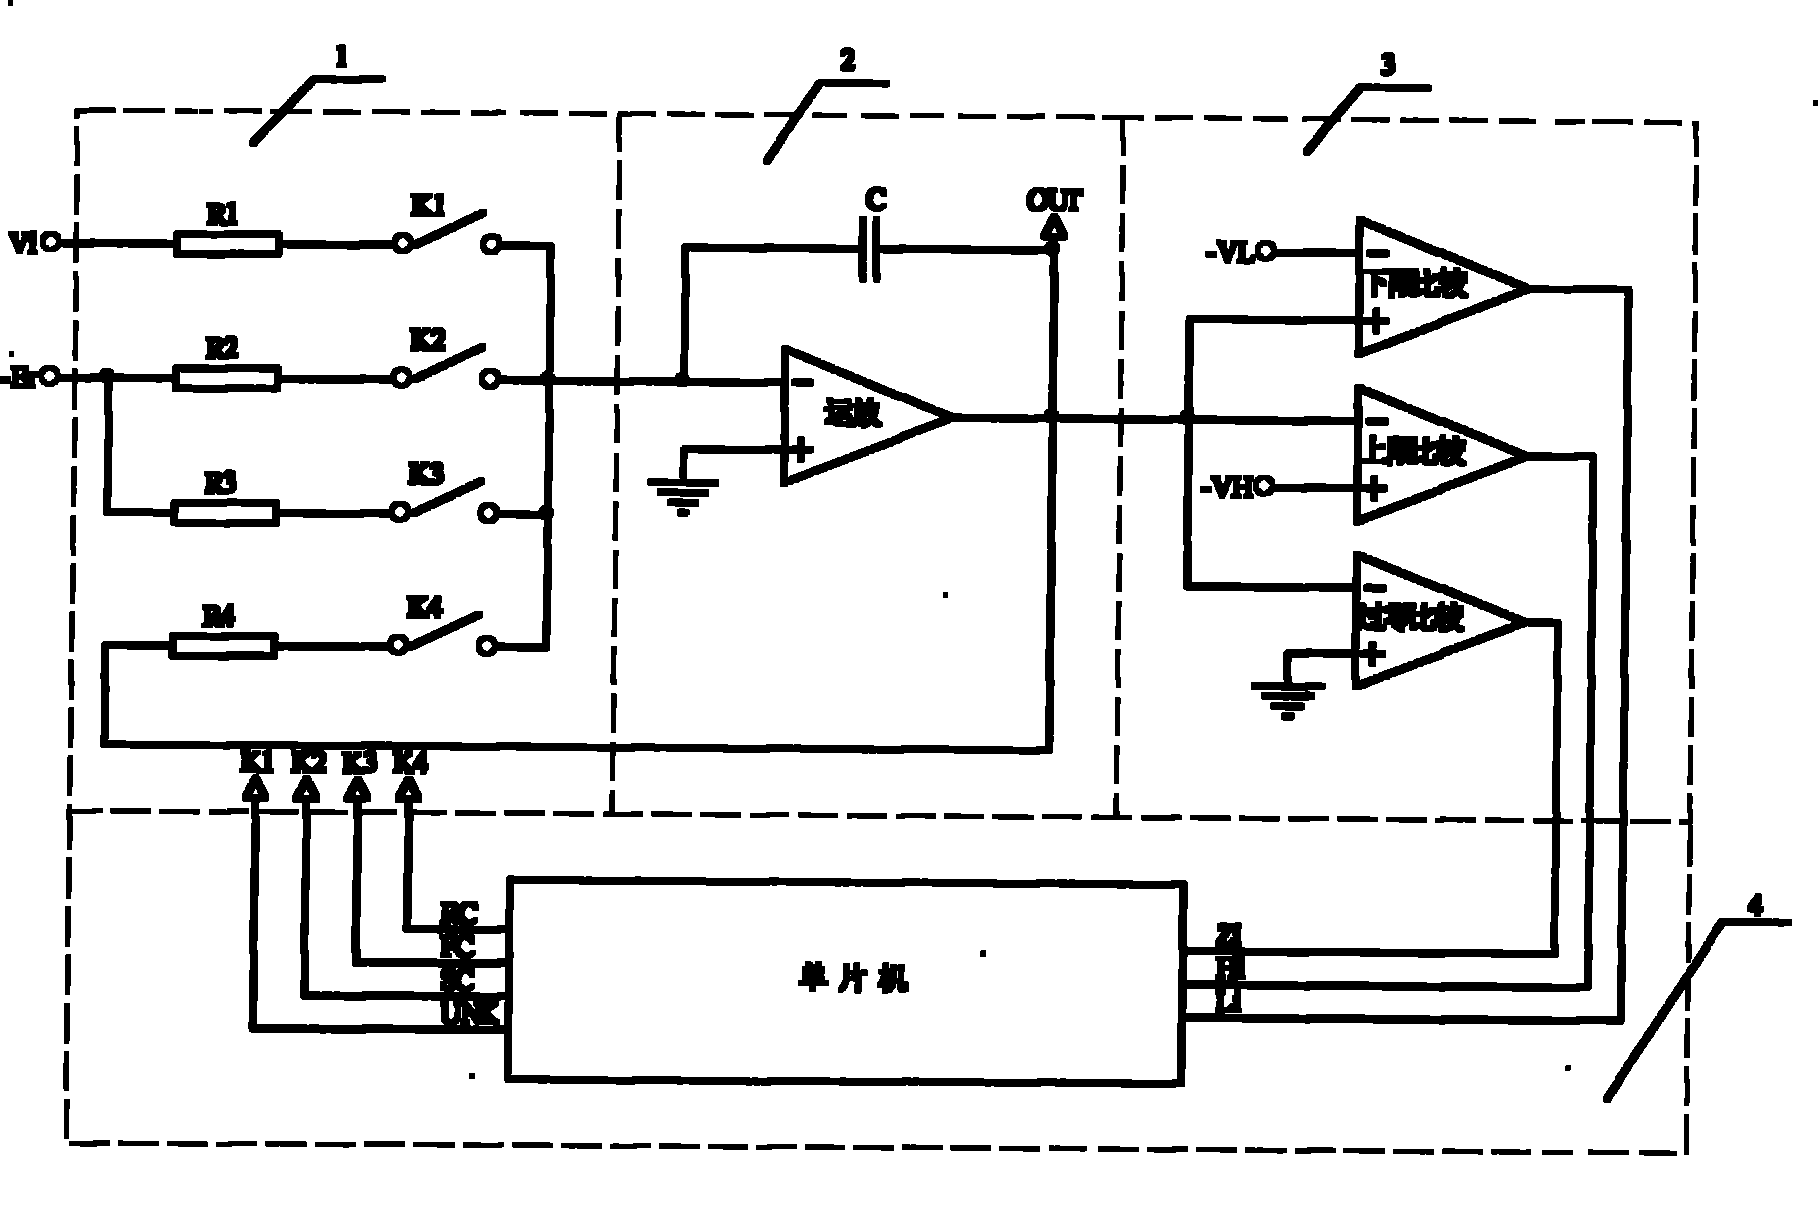 High-precision fast-integration type AD (Analog-Digital) converter based on single chip microcomputer